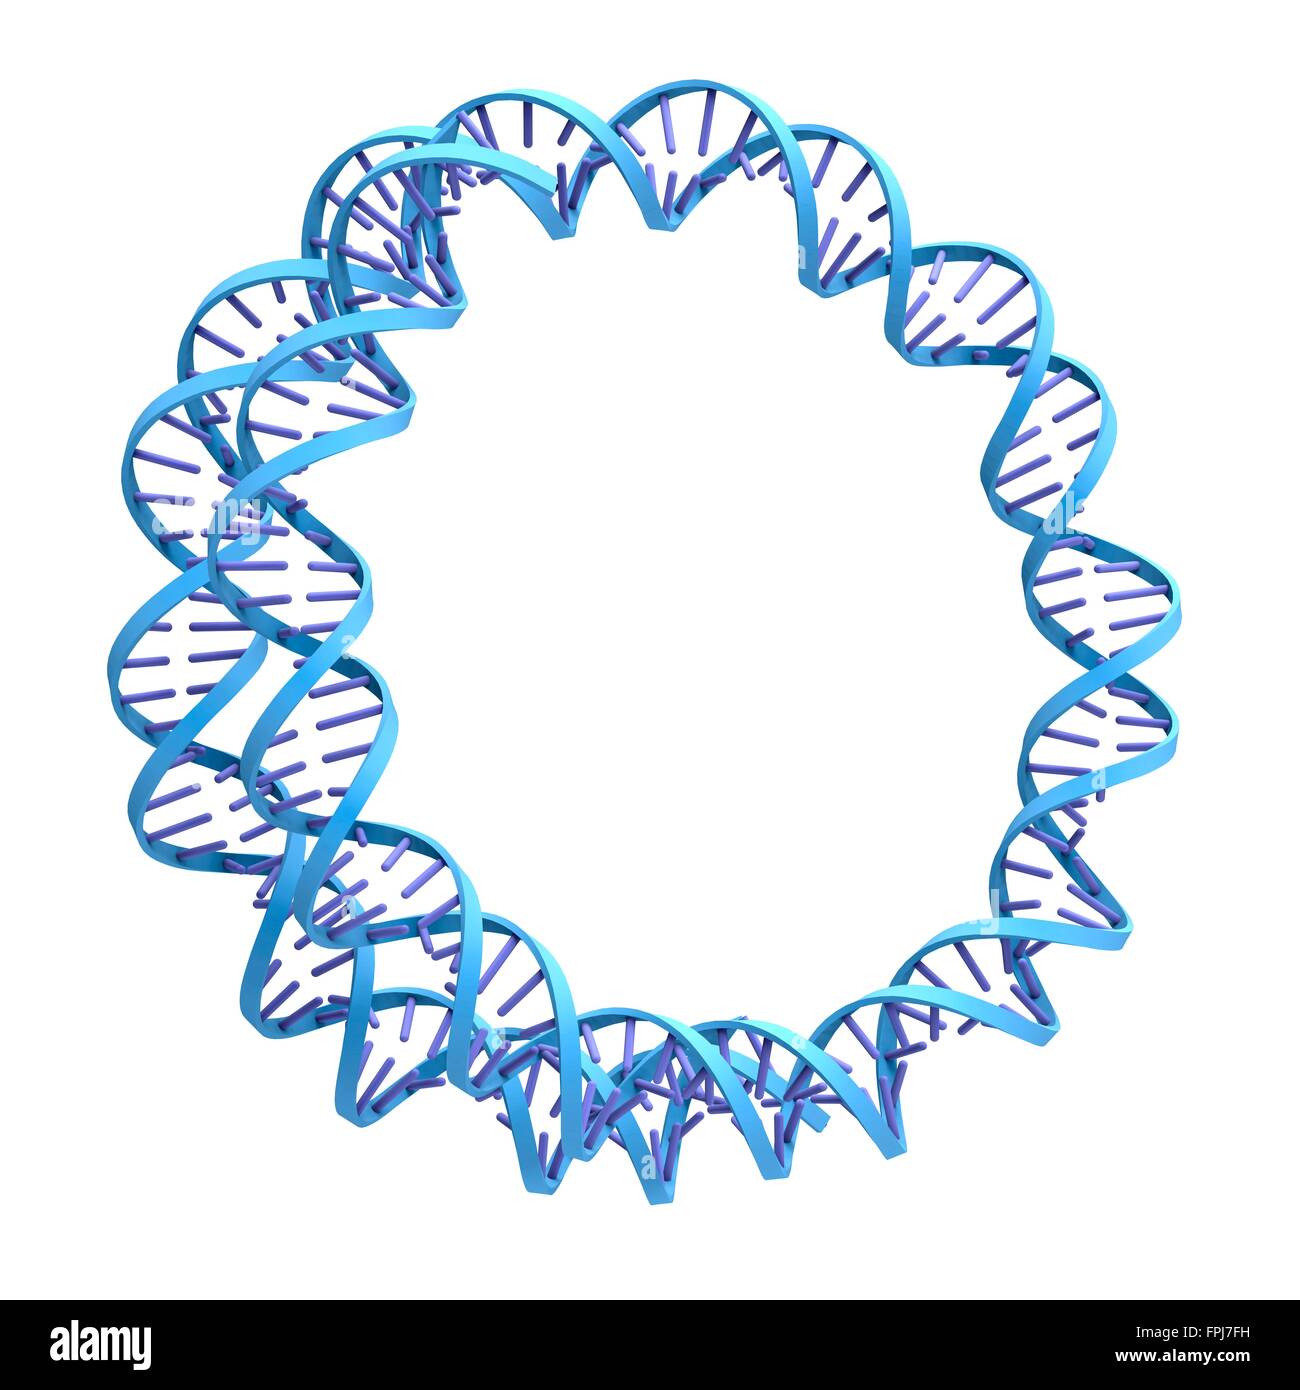 Kreisförmige DNA (Desoxyribonukleinsäure) Molekül, Computer-Grafik. Stockfoto